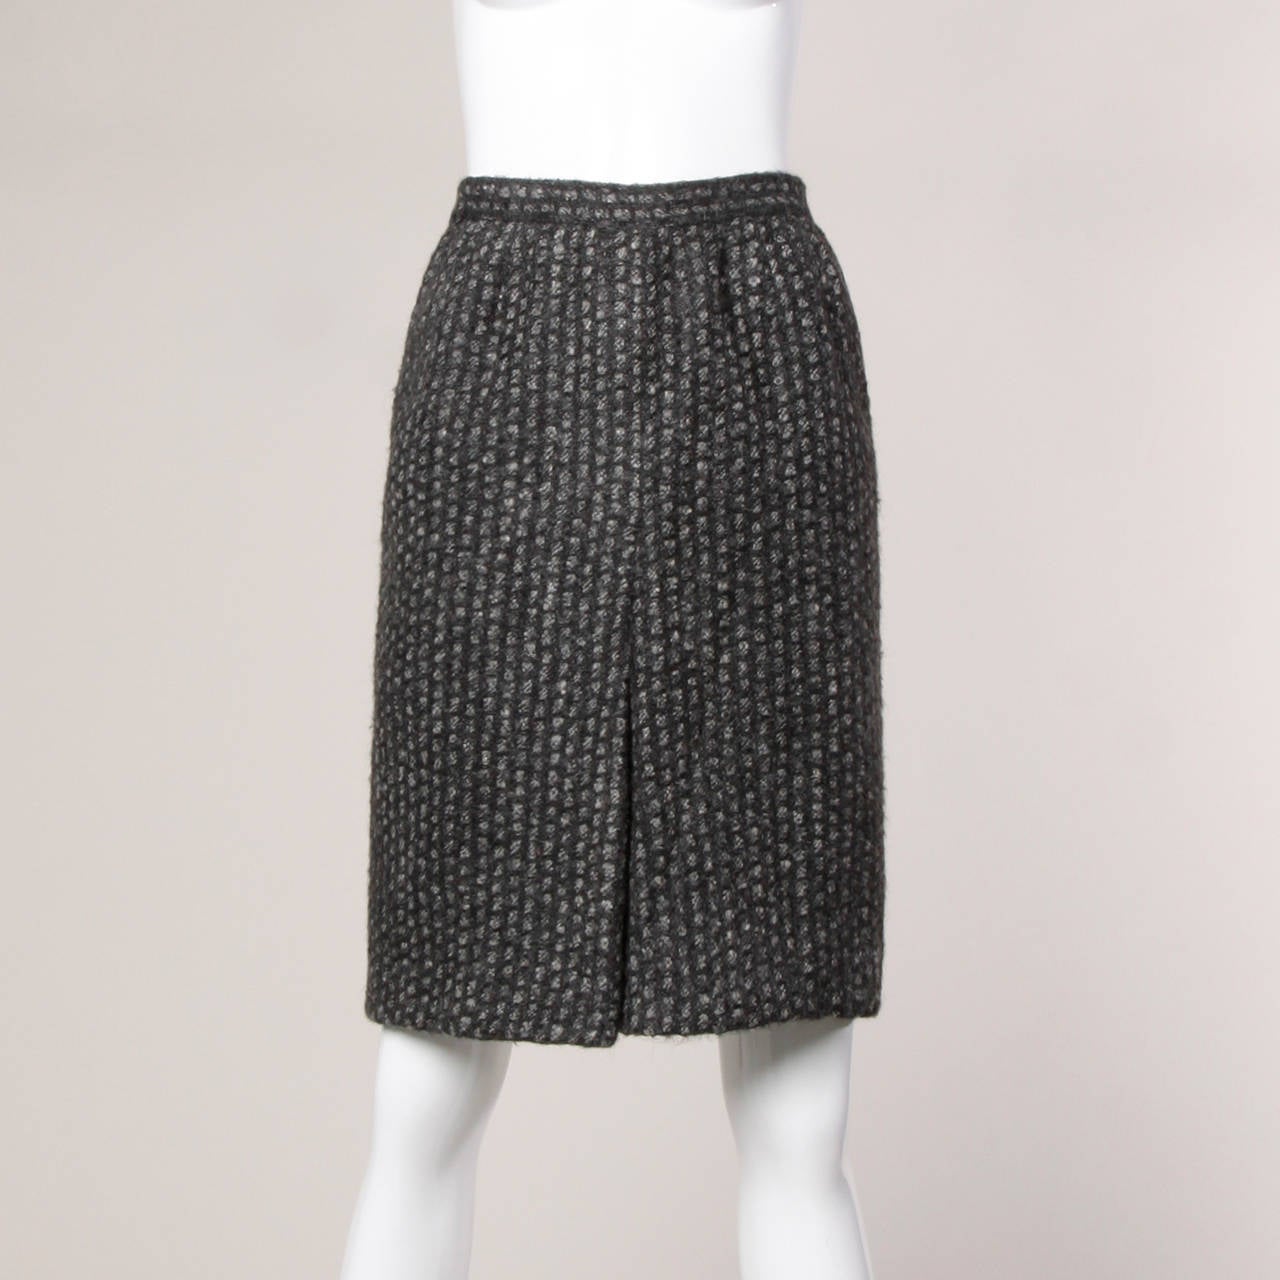 Tiziani 1960s Italian Couture Cashmere Wool 4-Piece Ensemble or Skirt Suit 4